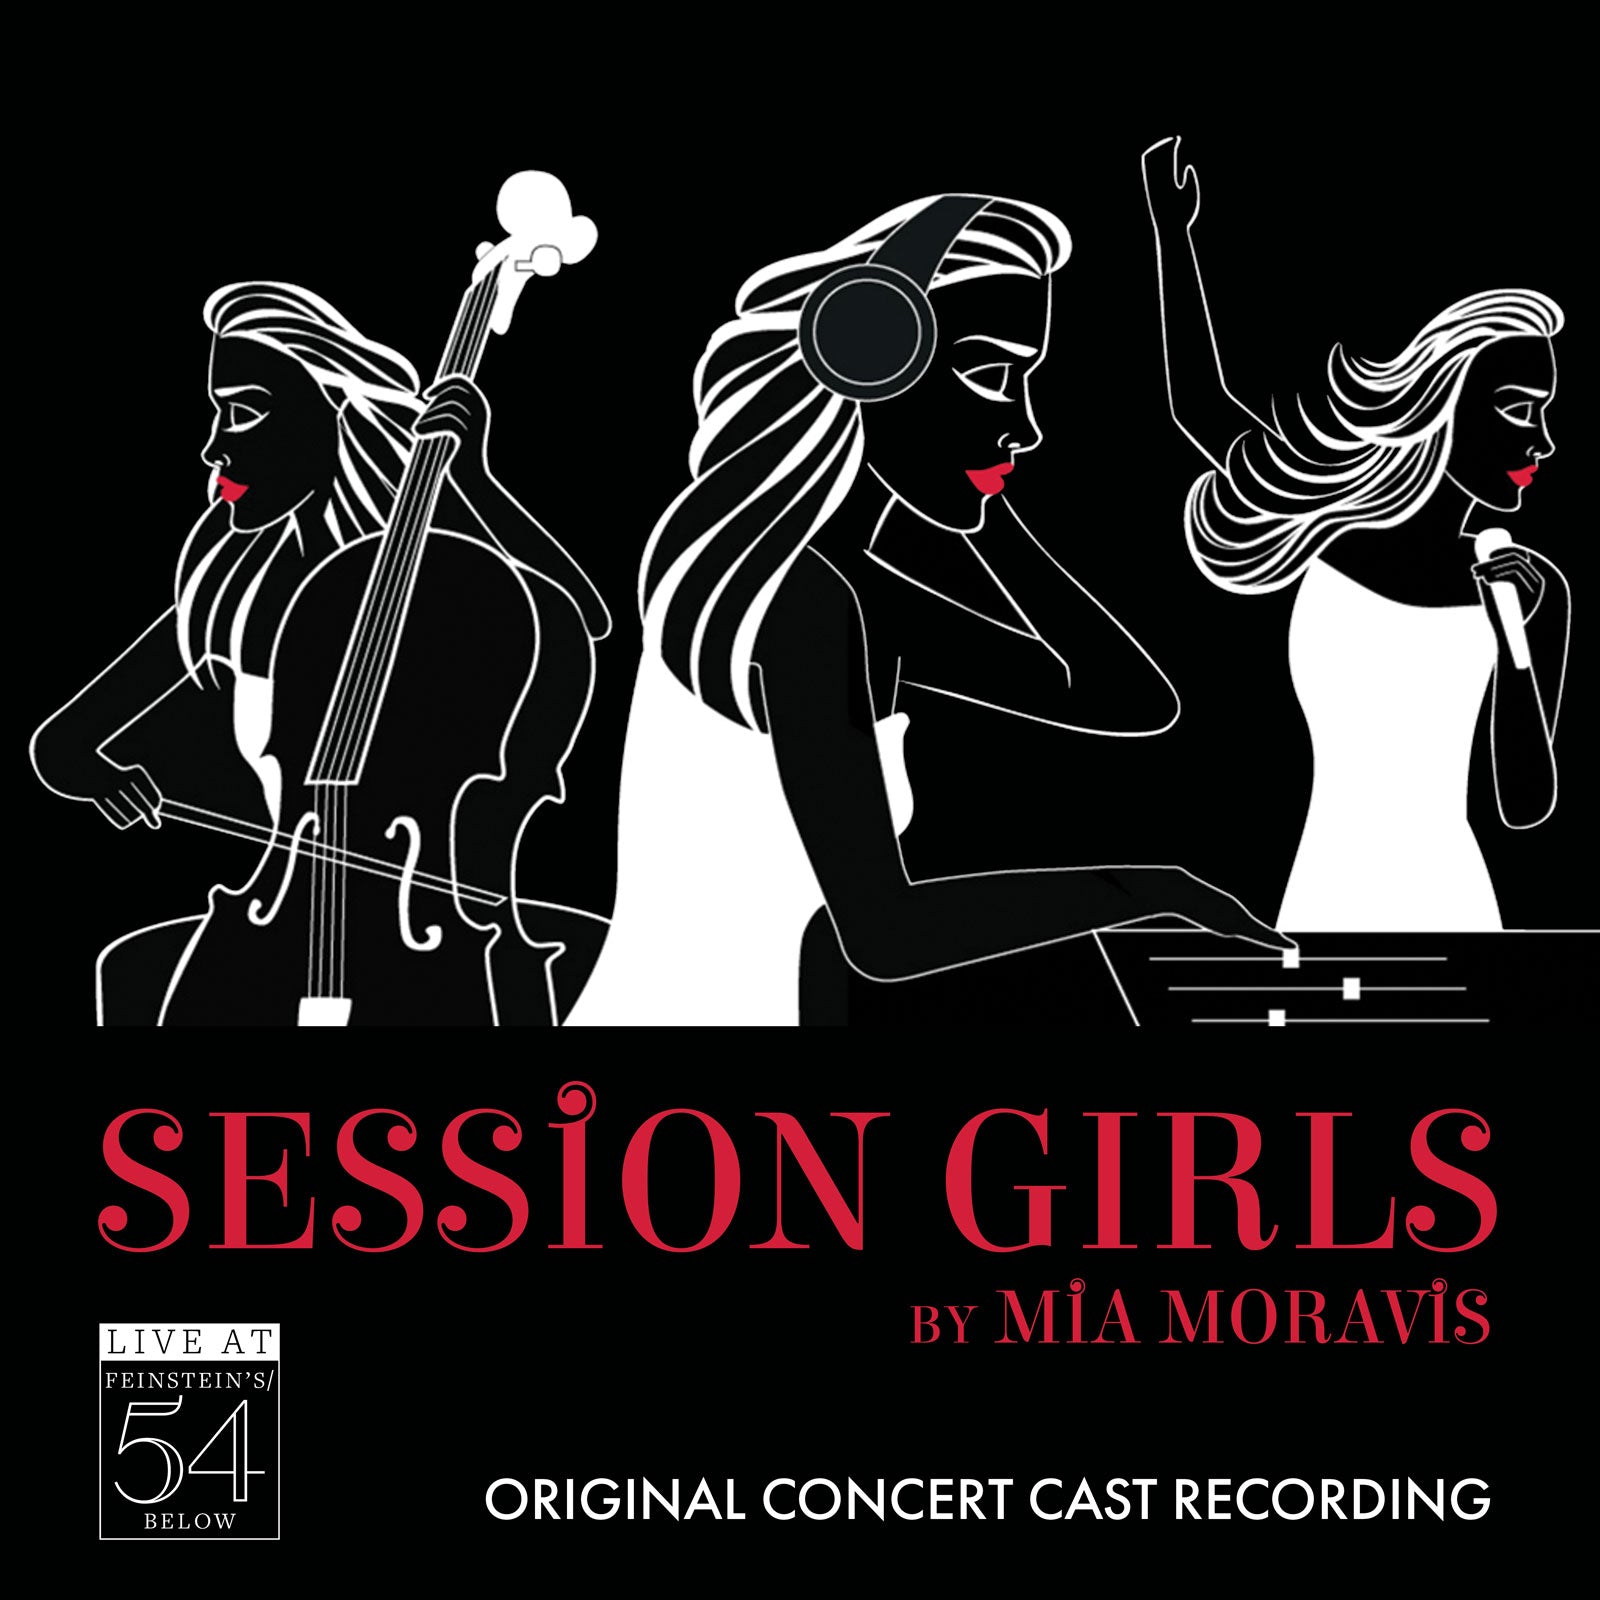 Session Girls (Original Concert Cast Recording) - Live at Feinstein's / 54 Below [MP3]